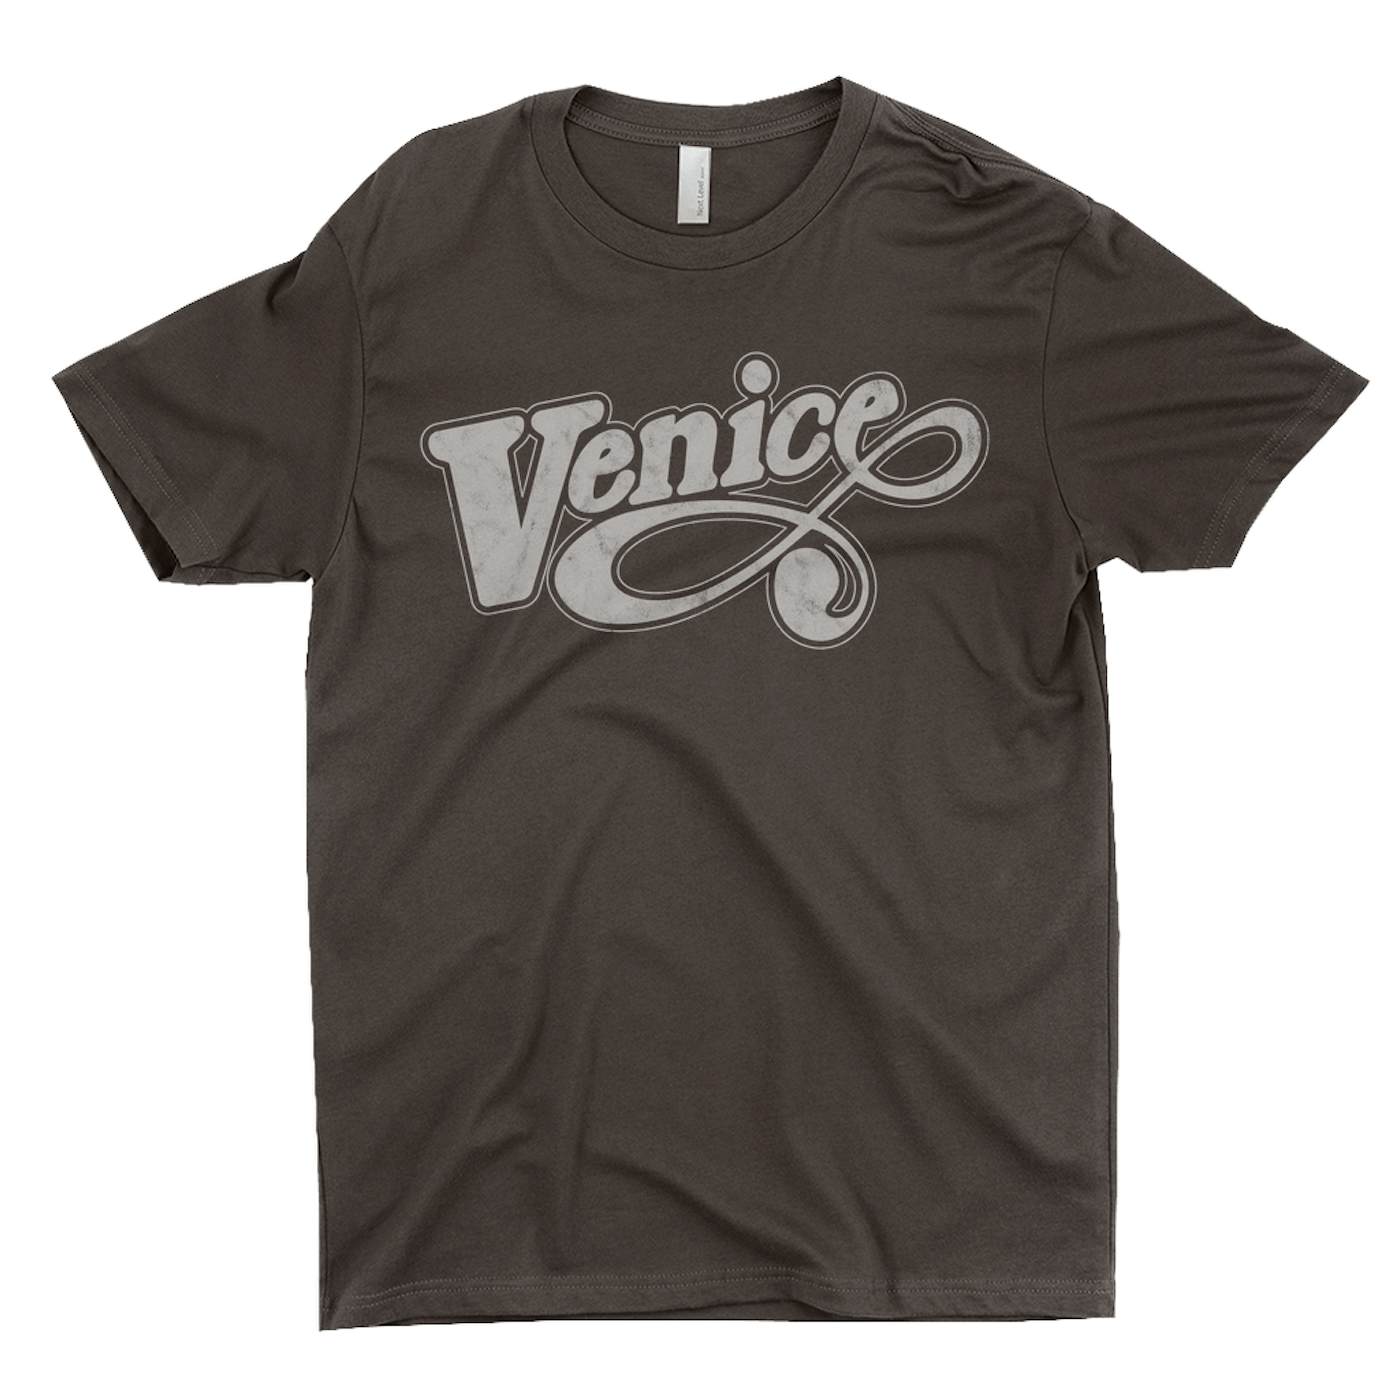 Foo Fighters T-Shirt | Venice Worn By Taylor Hawkins Foo Fighters Shirt